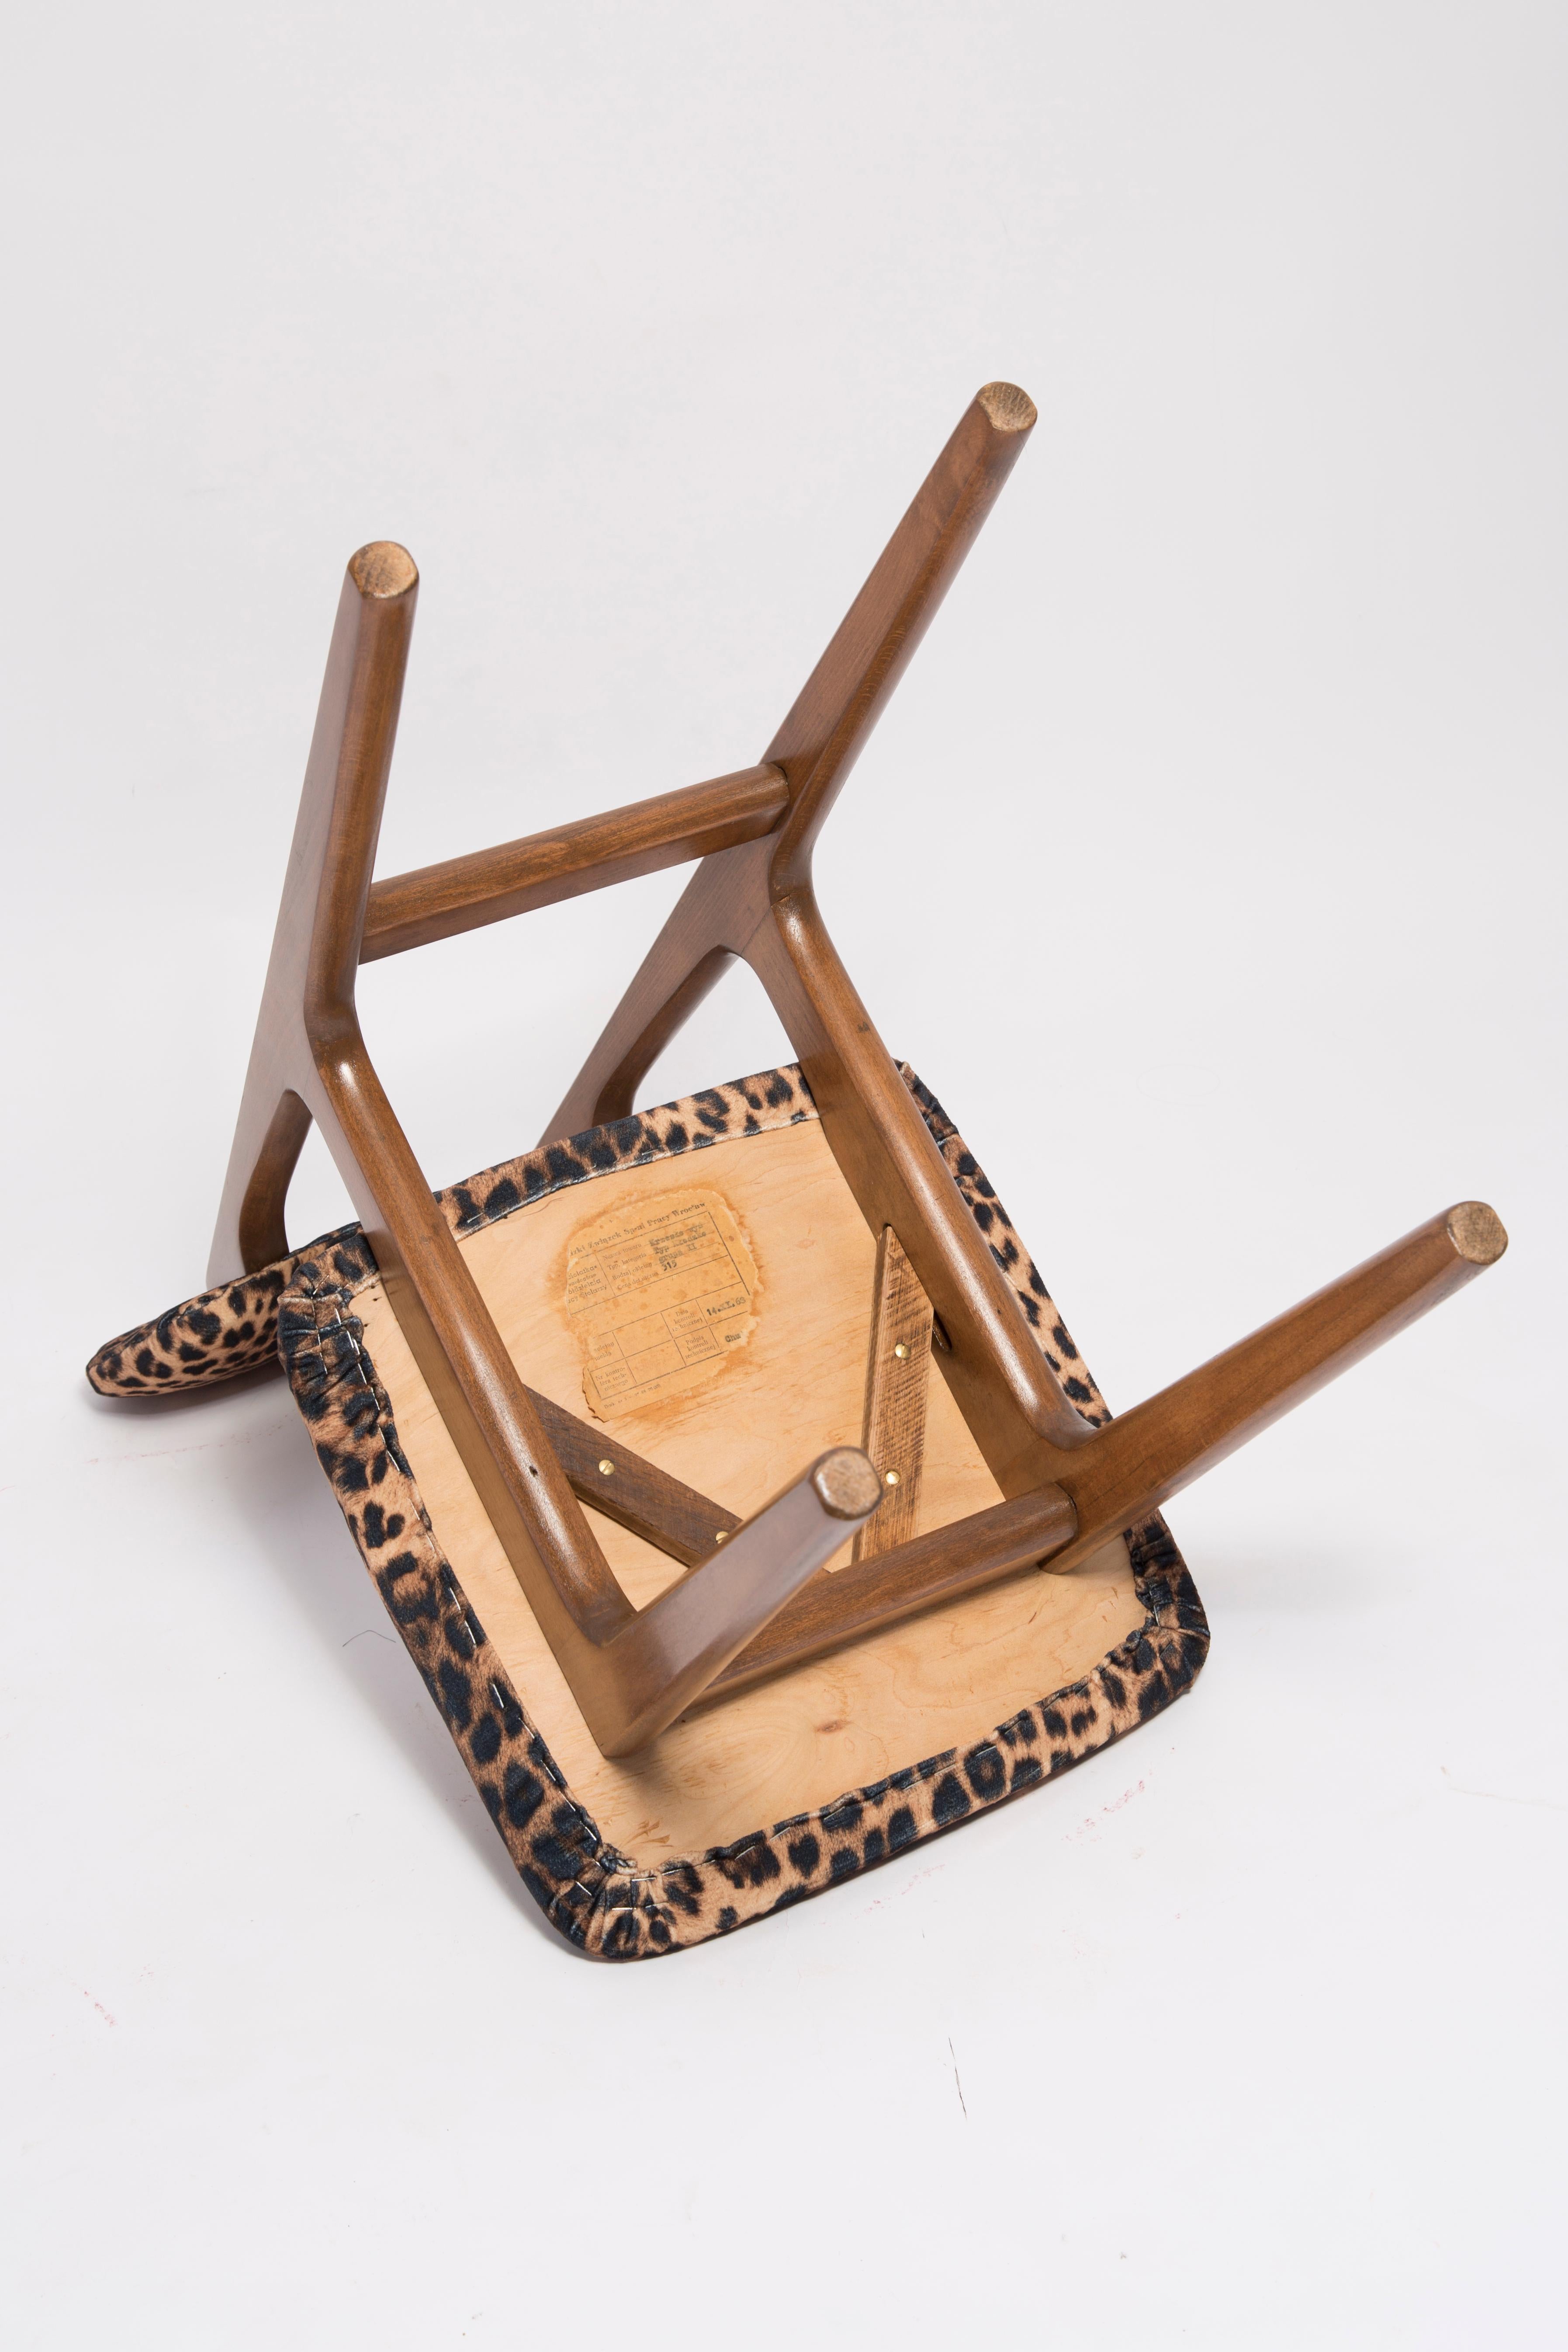 20th Century Mid Century Leopard Velvet Chair, Walnut Wood, Rajmund Halas, Poland, 1960s For Sale